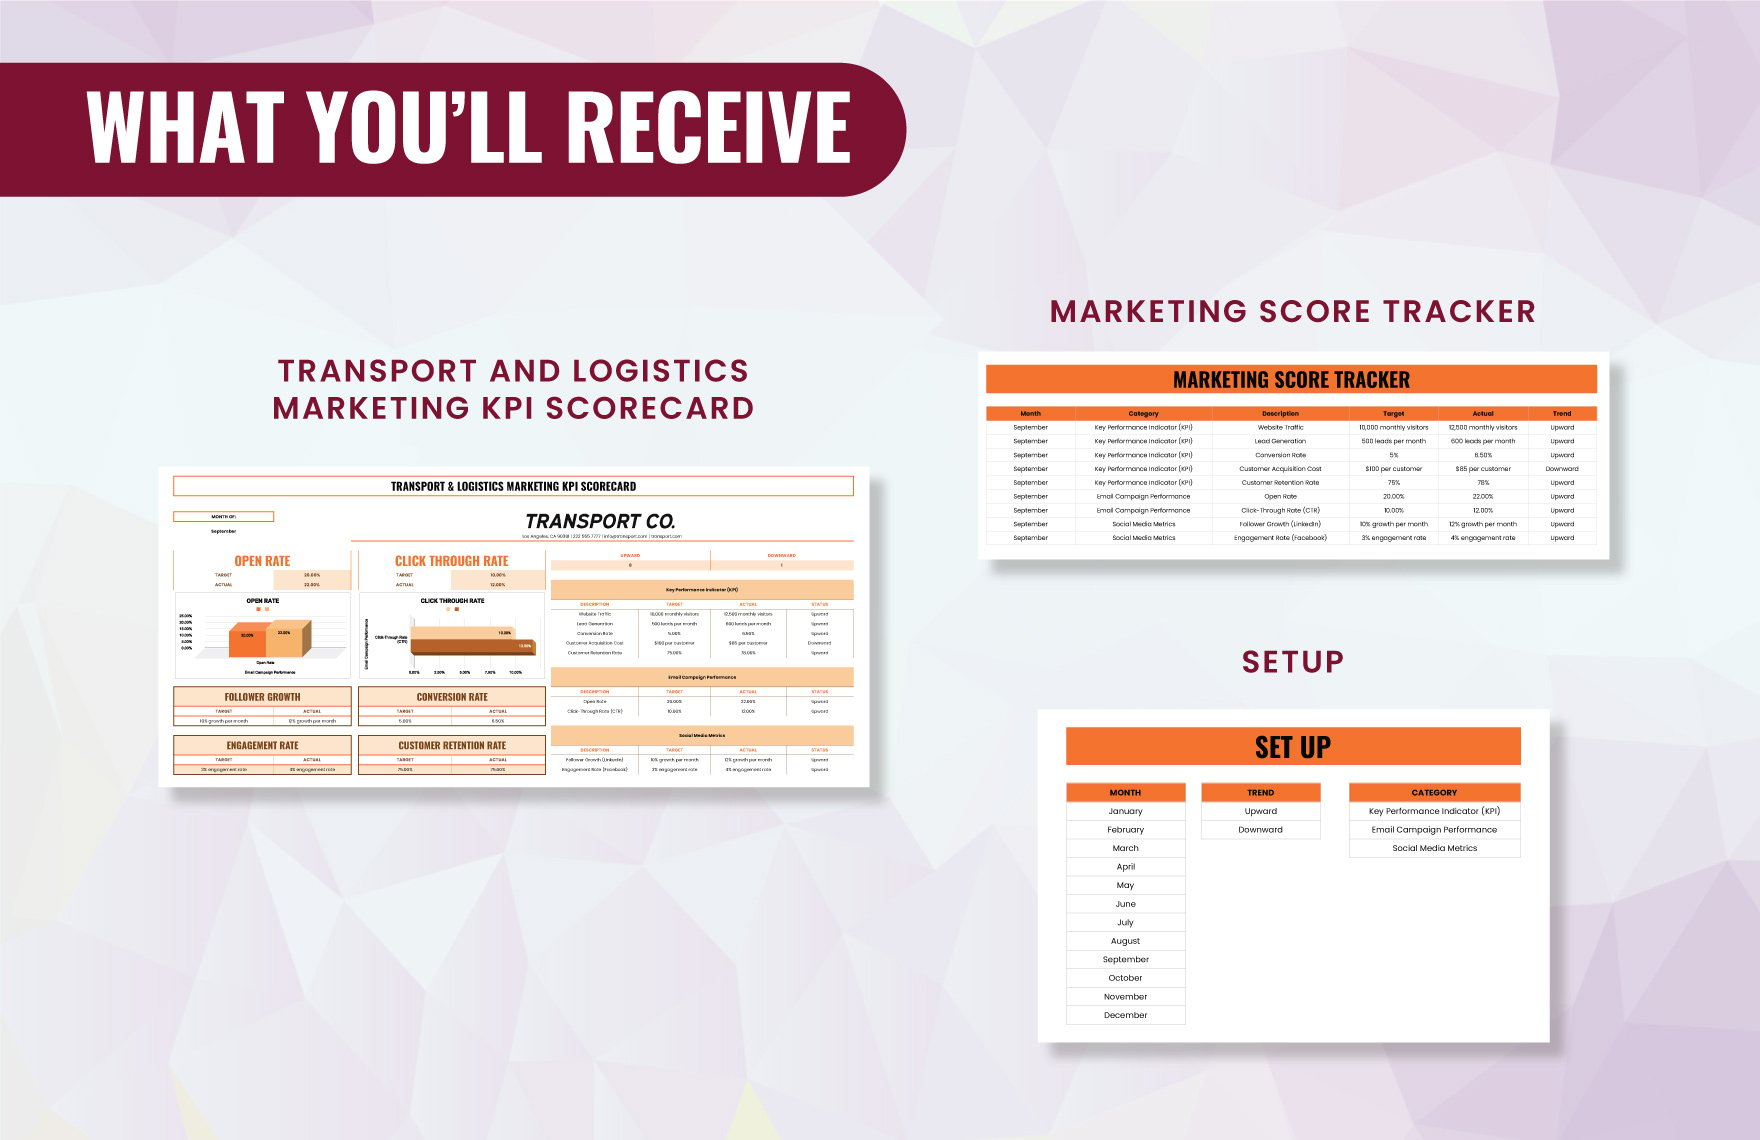 Transport and Logistics Marketing KPI Scorecard Template